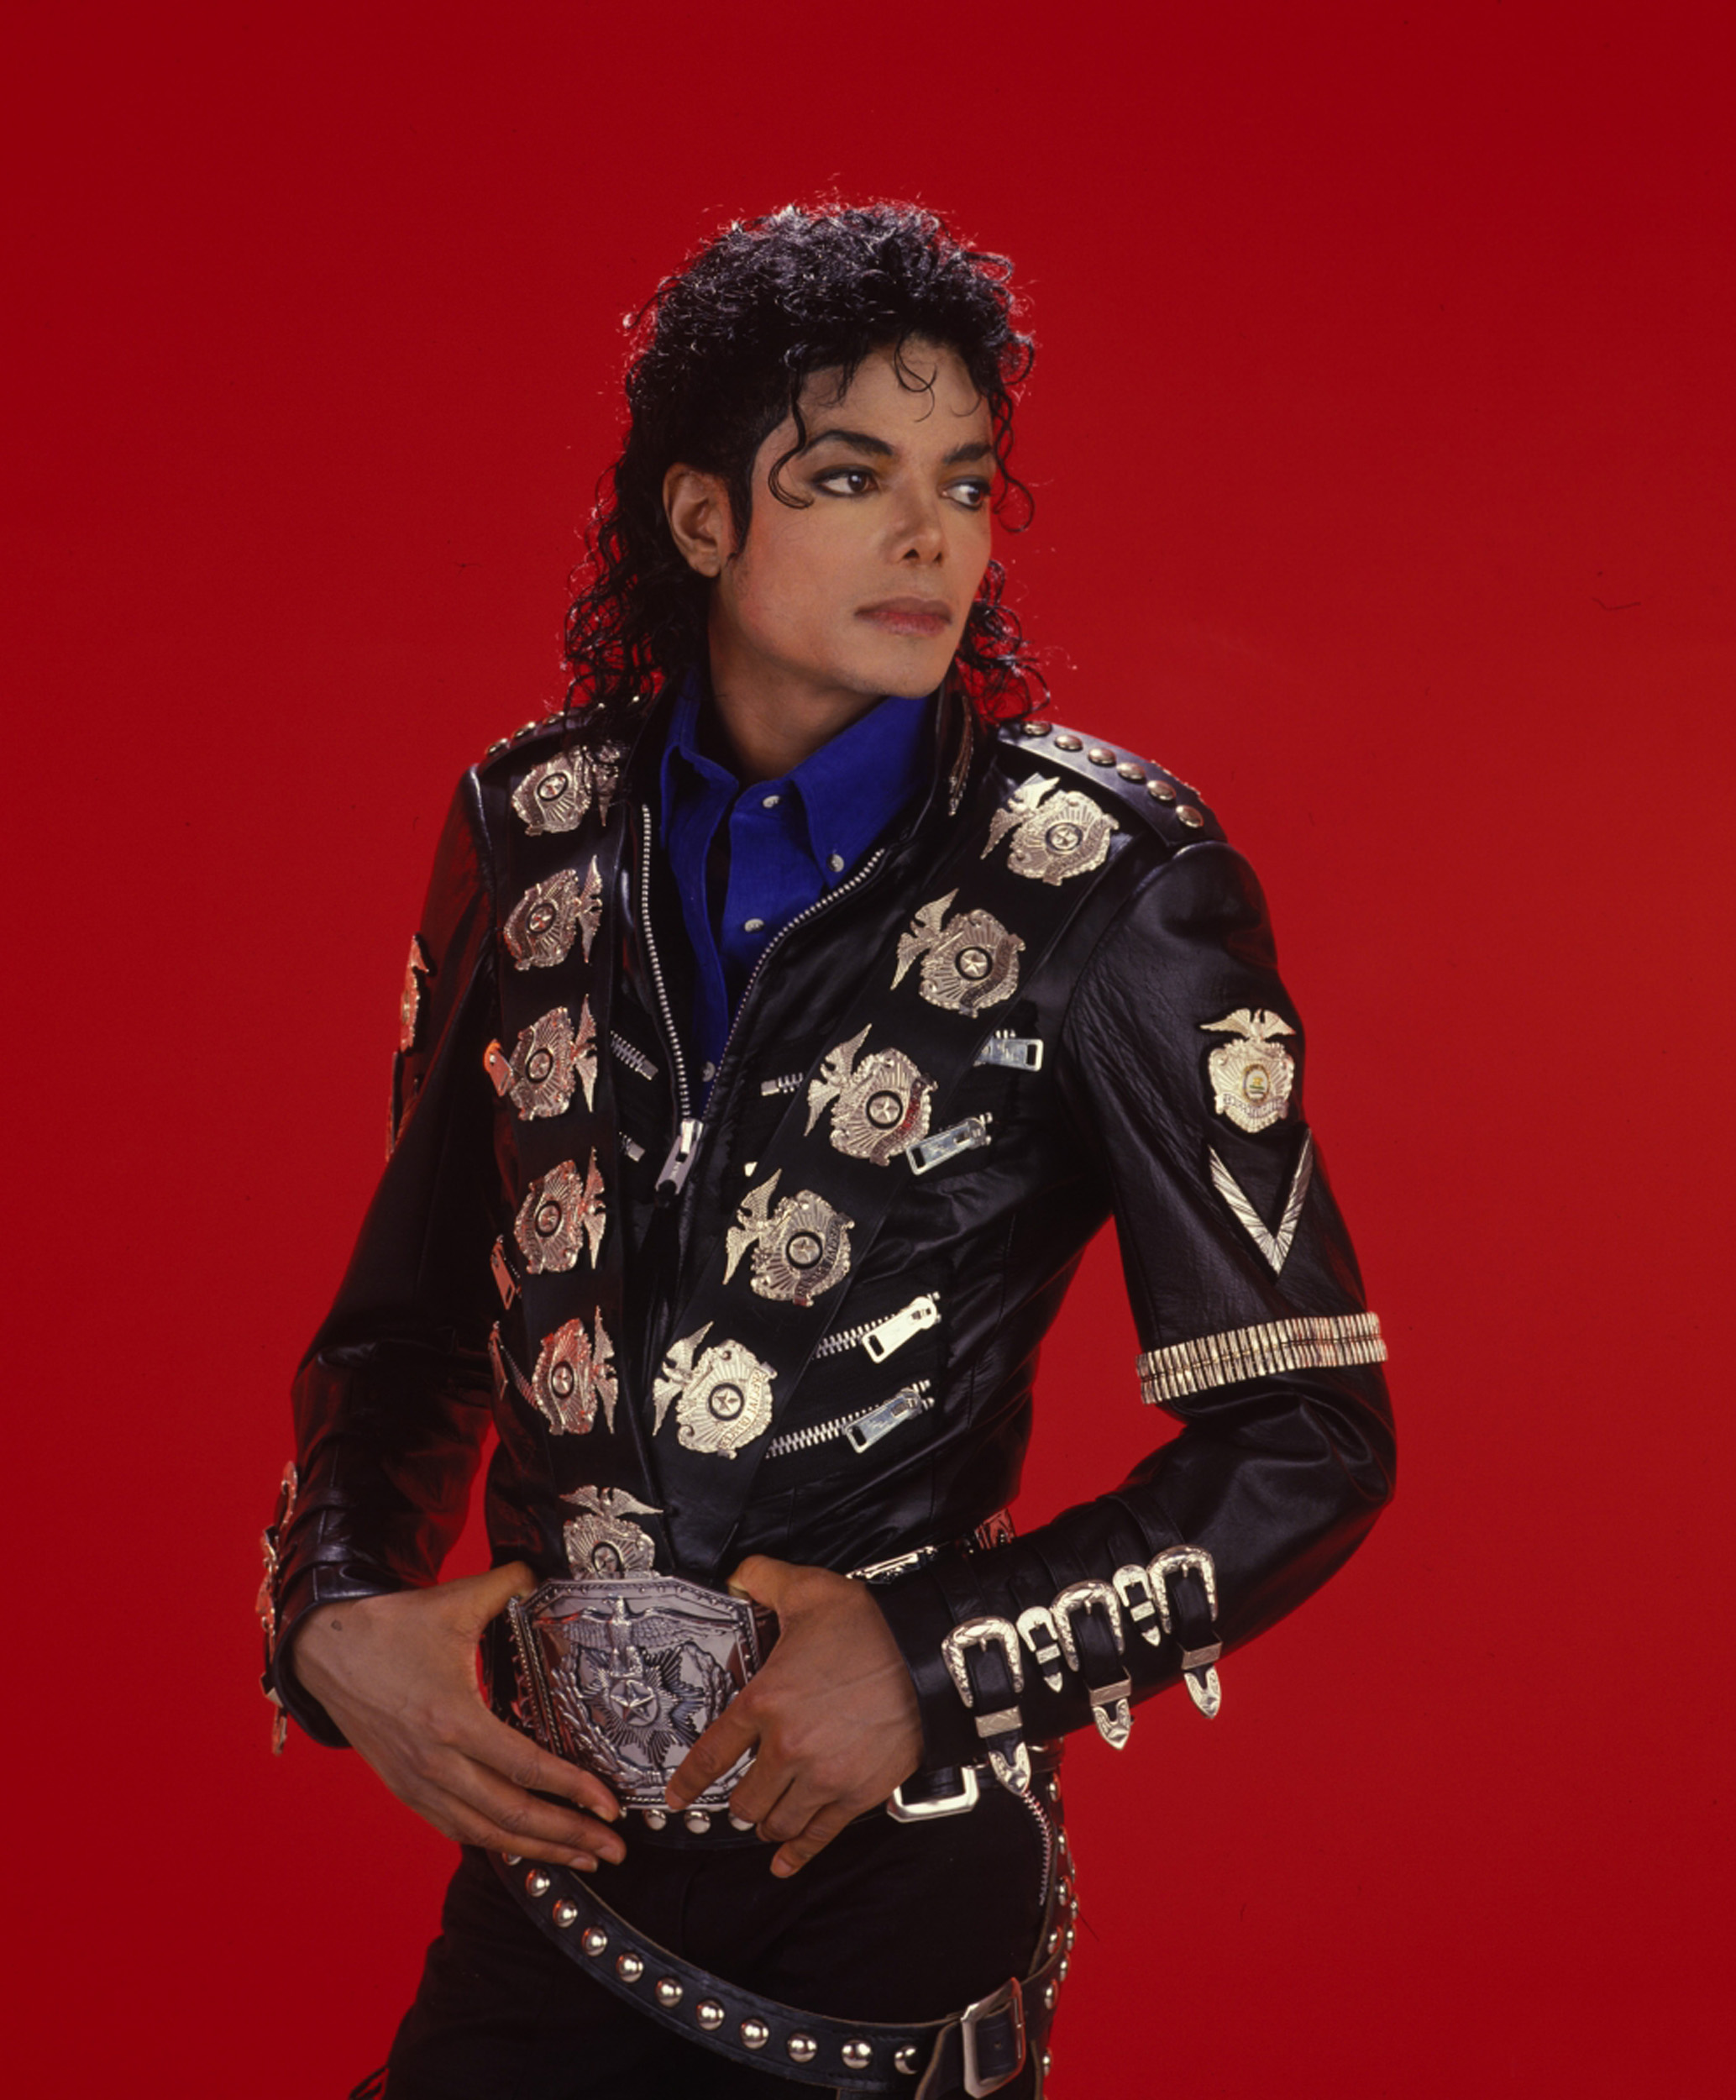 Michael Jackson photo 788 of 806 pics, wallpaper - photo #856258 ...